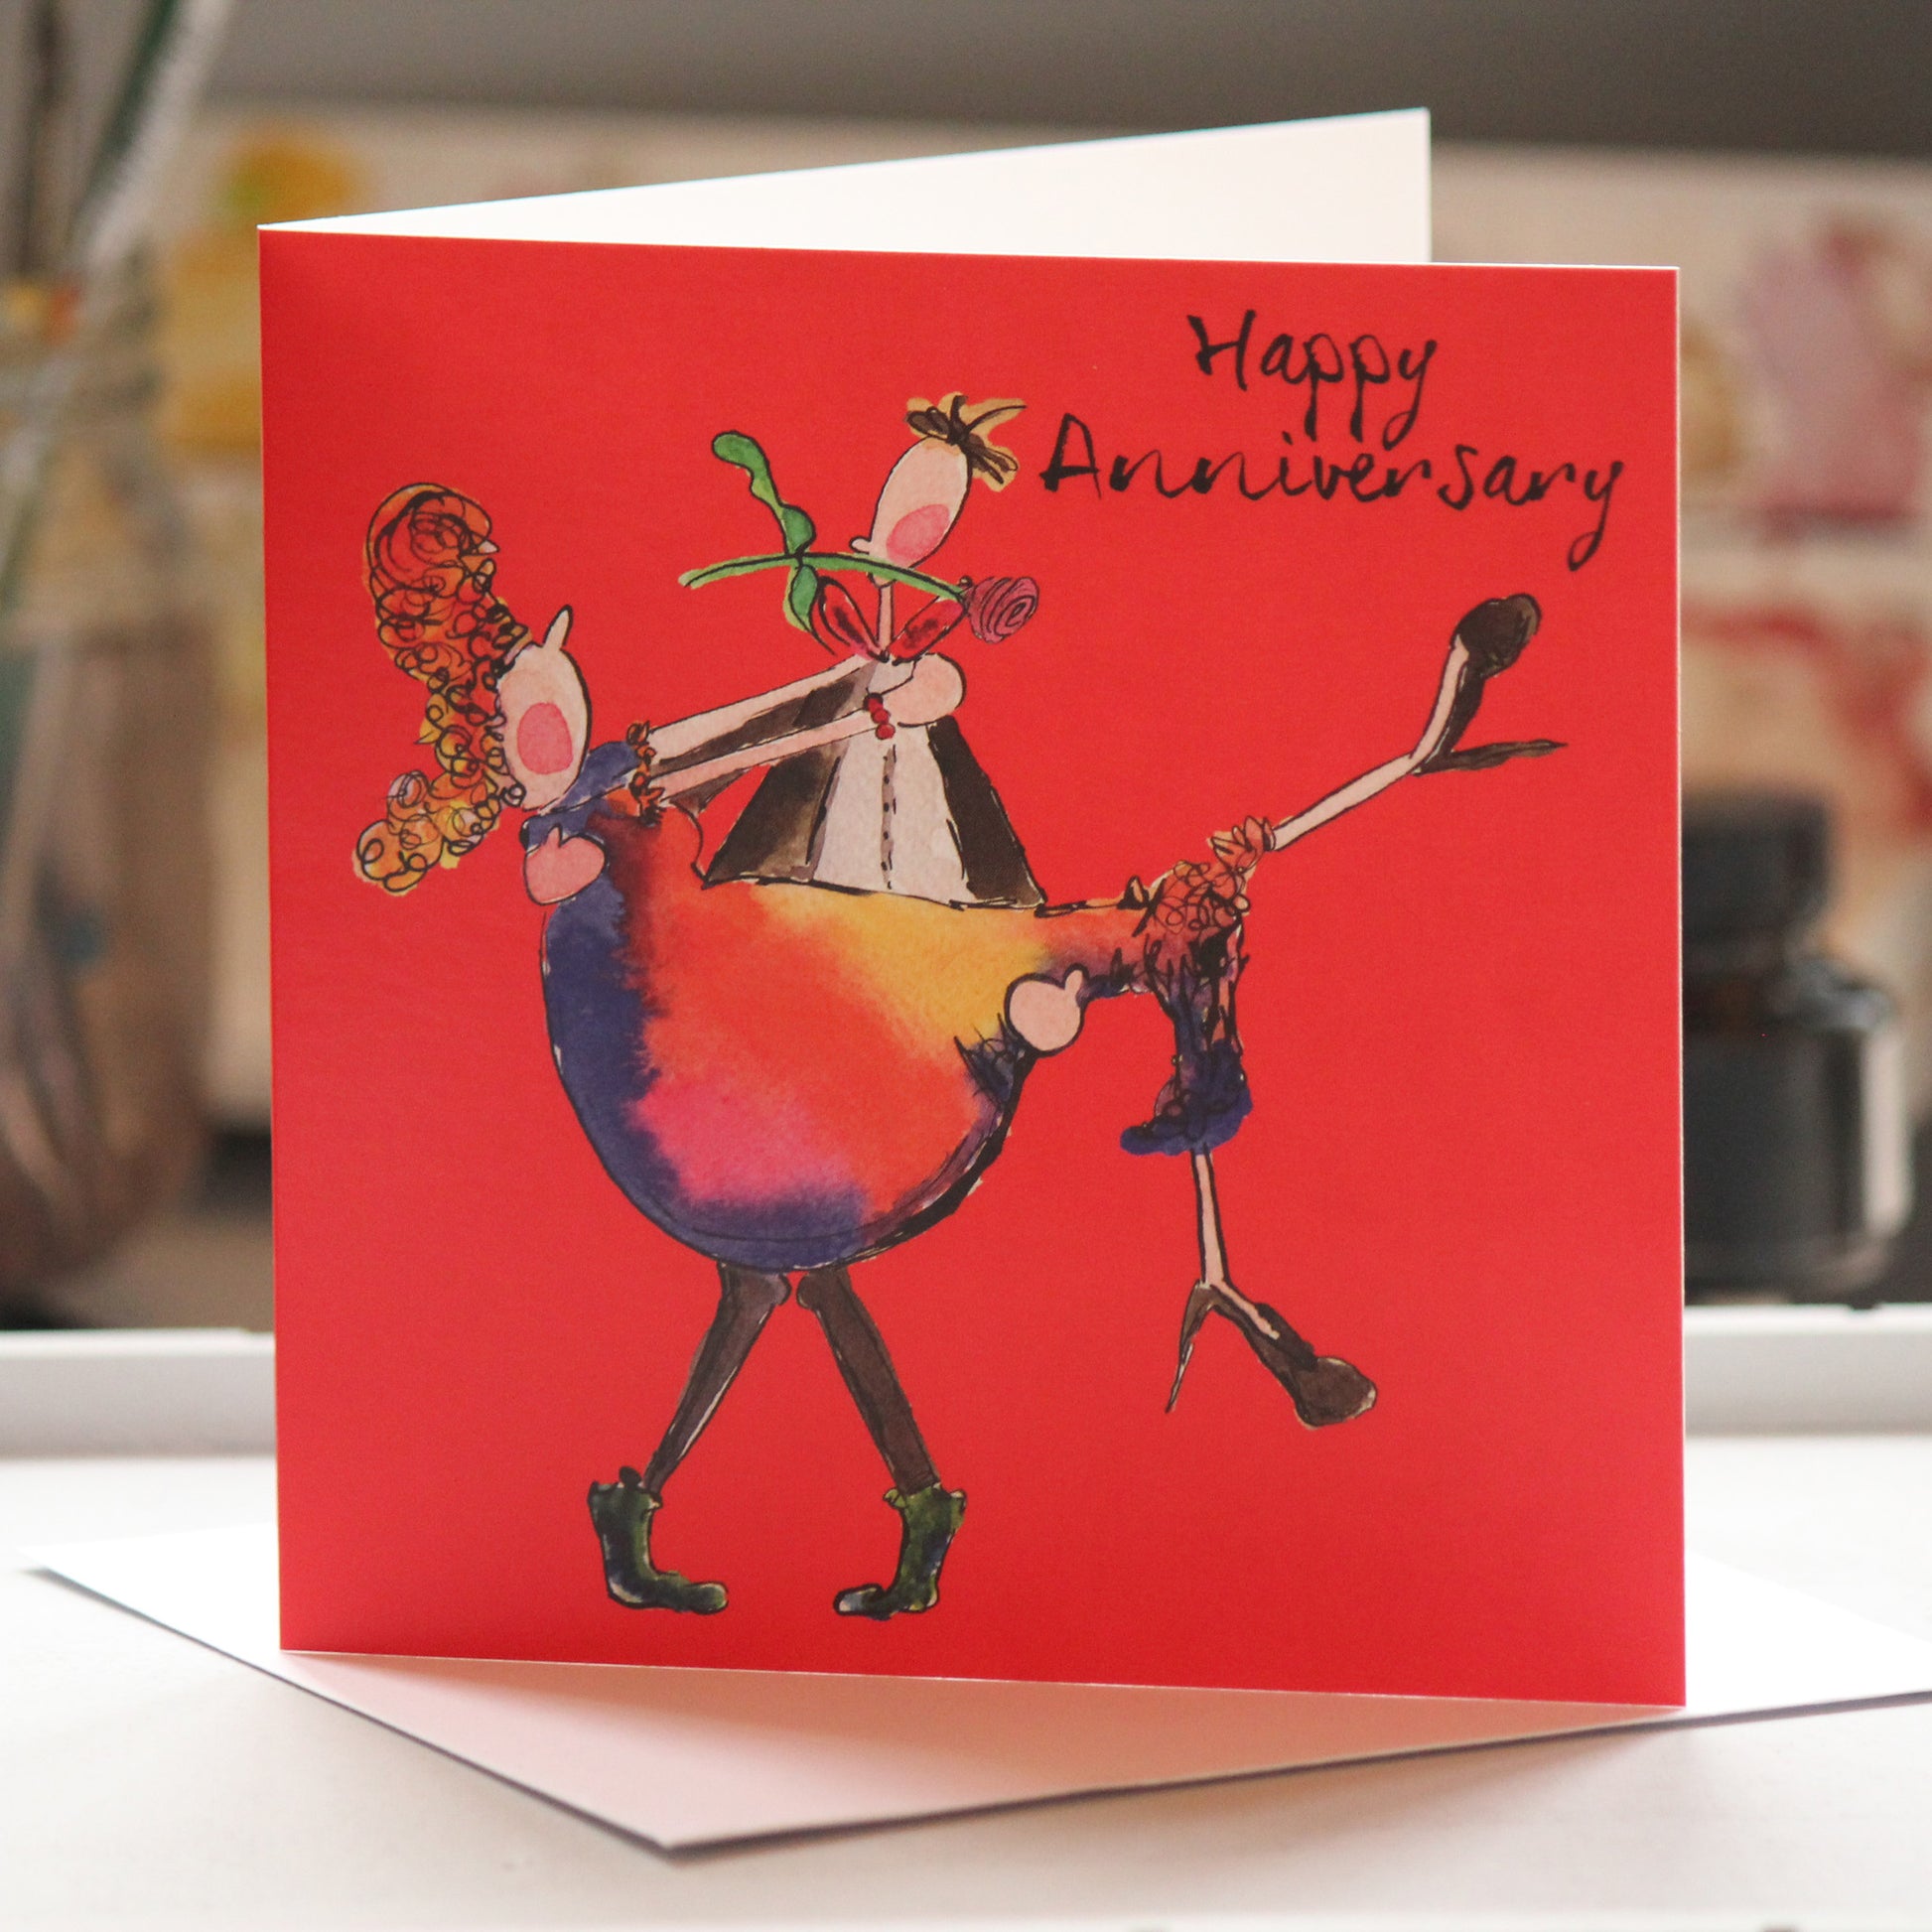 "Happy Anniversary" Greeting Card - damedoodah.com  - Art and Design by Katie Rudge 